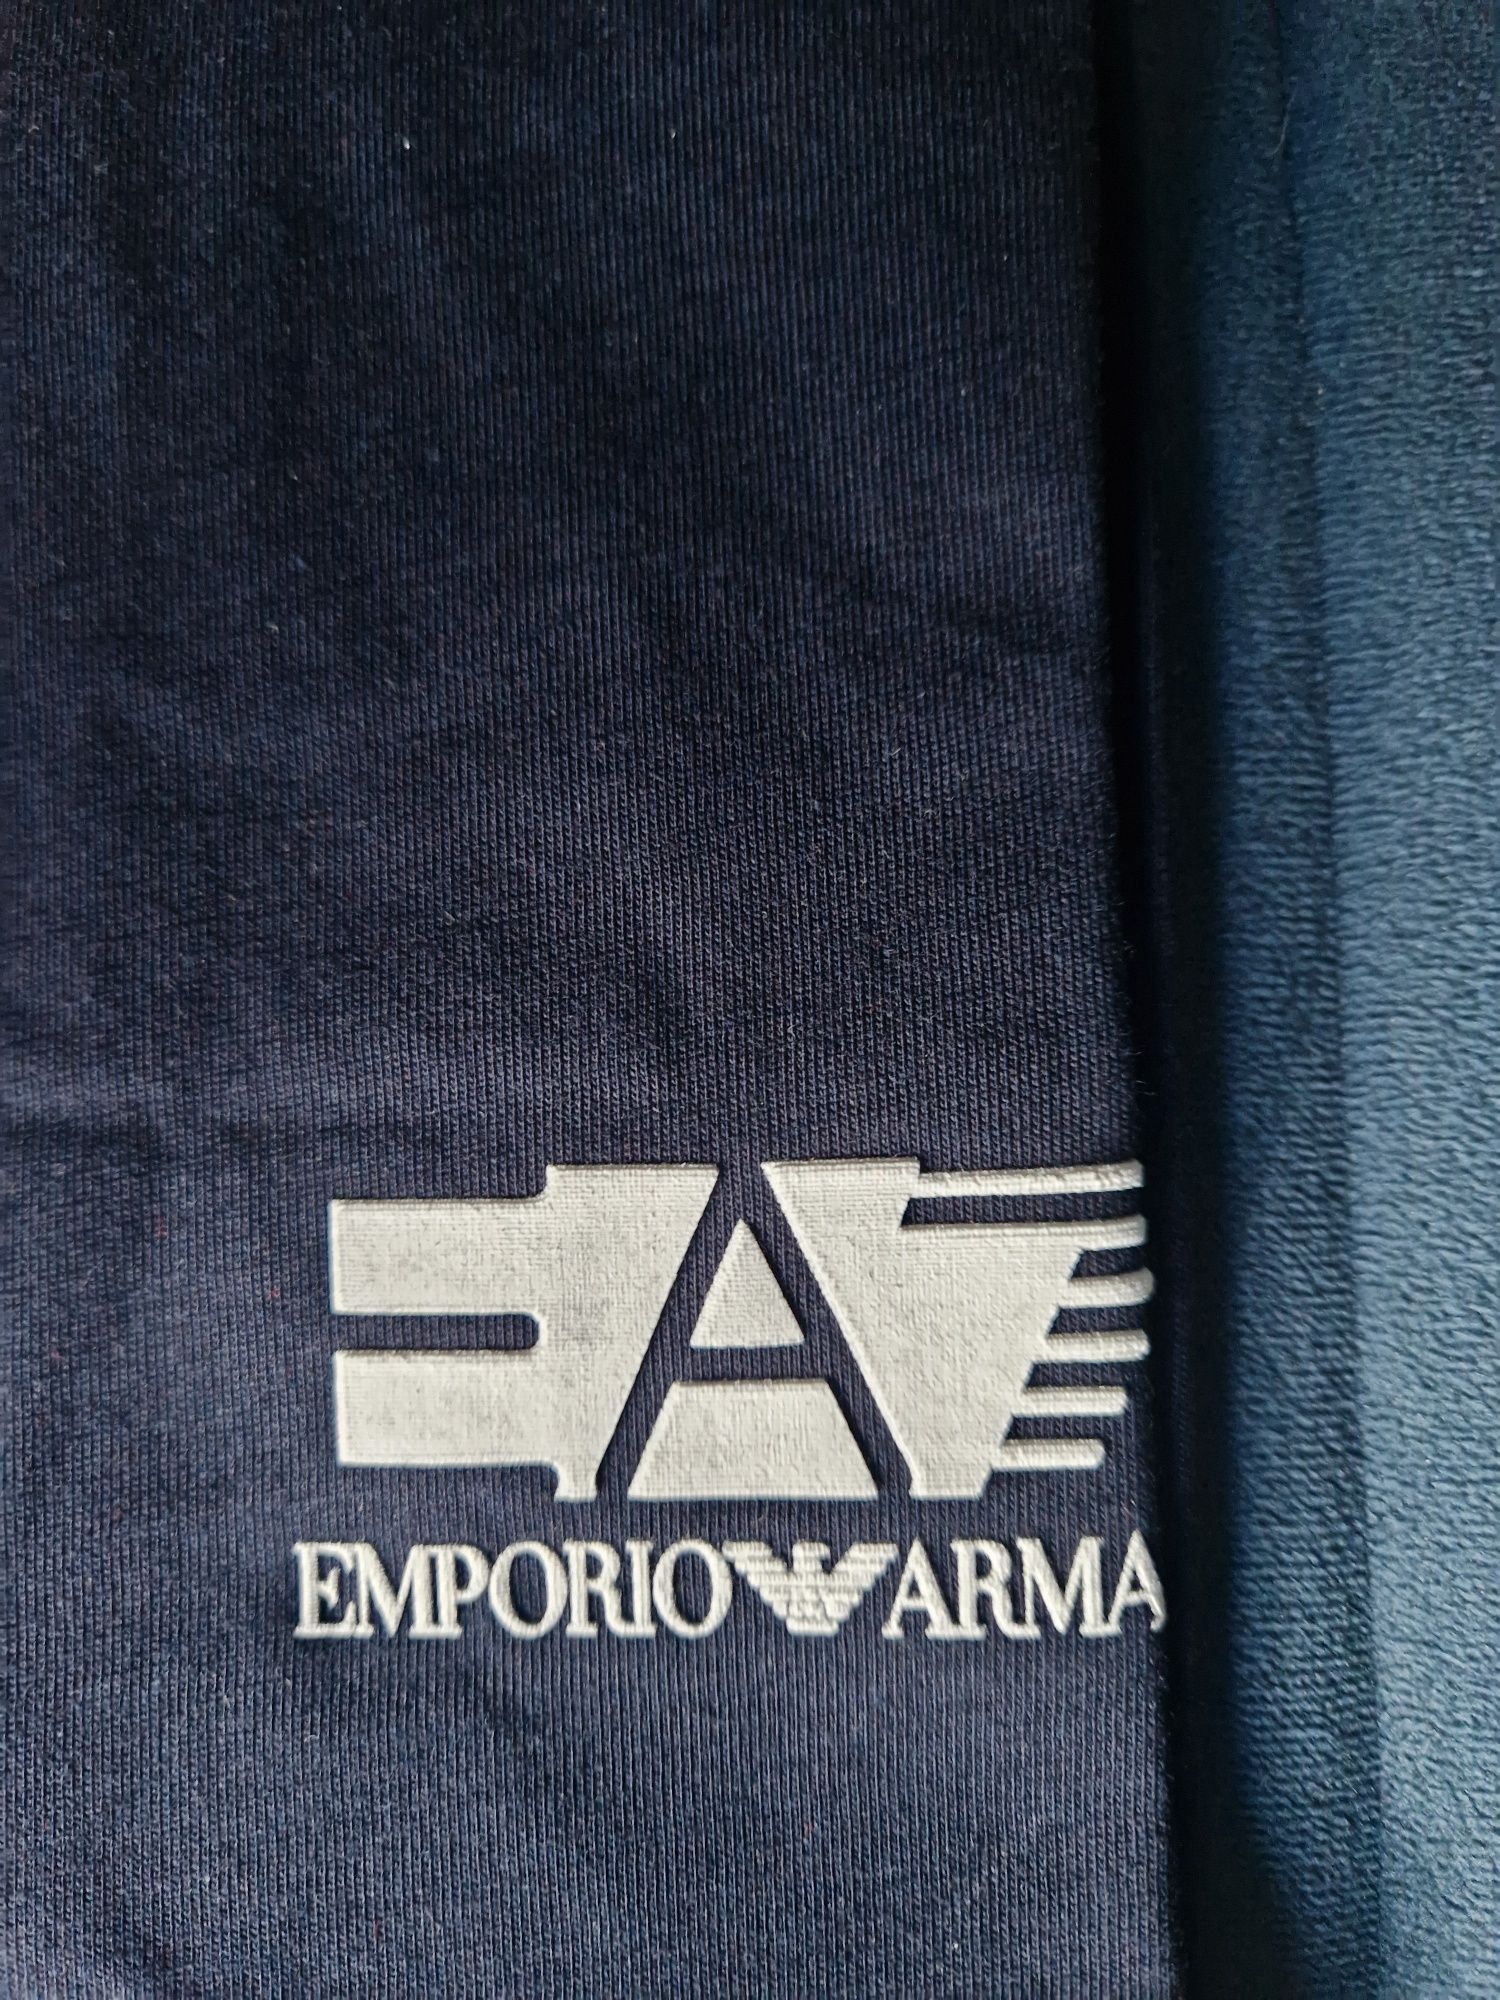 Koszulka Emporio Armani granatowa XL